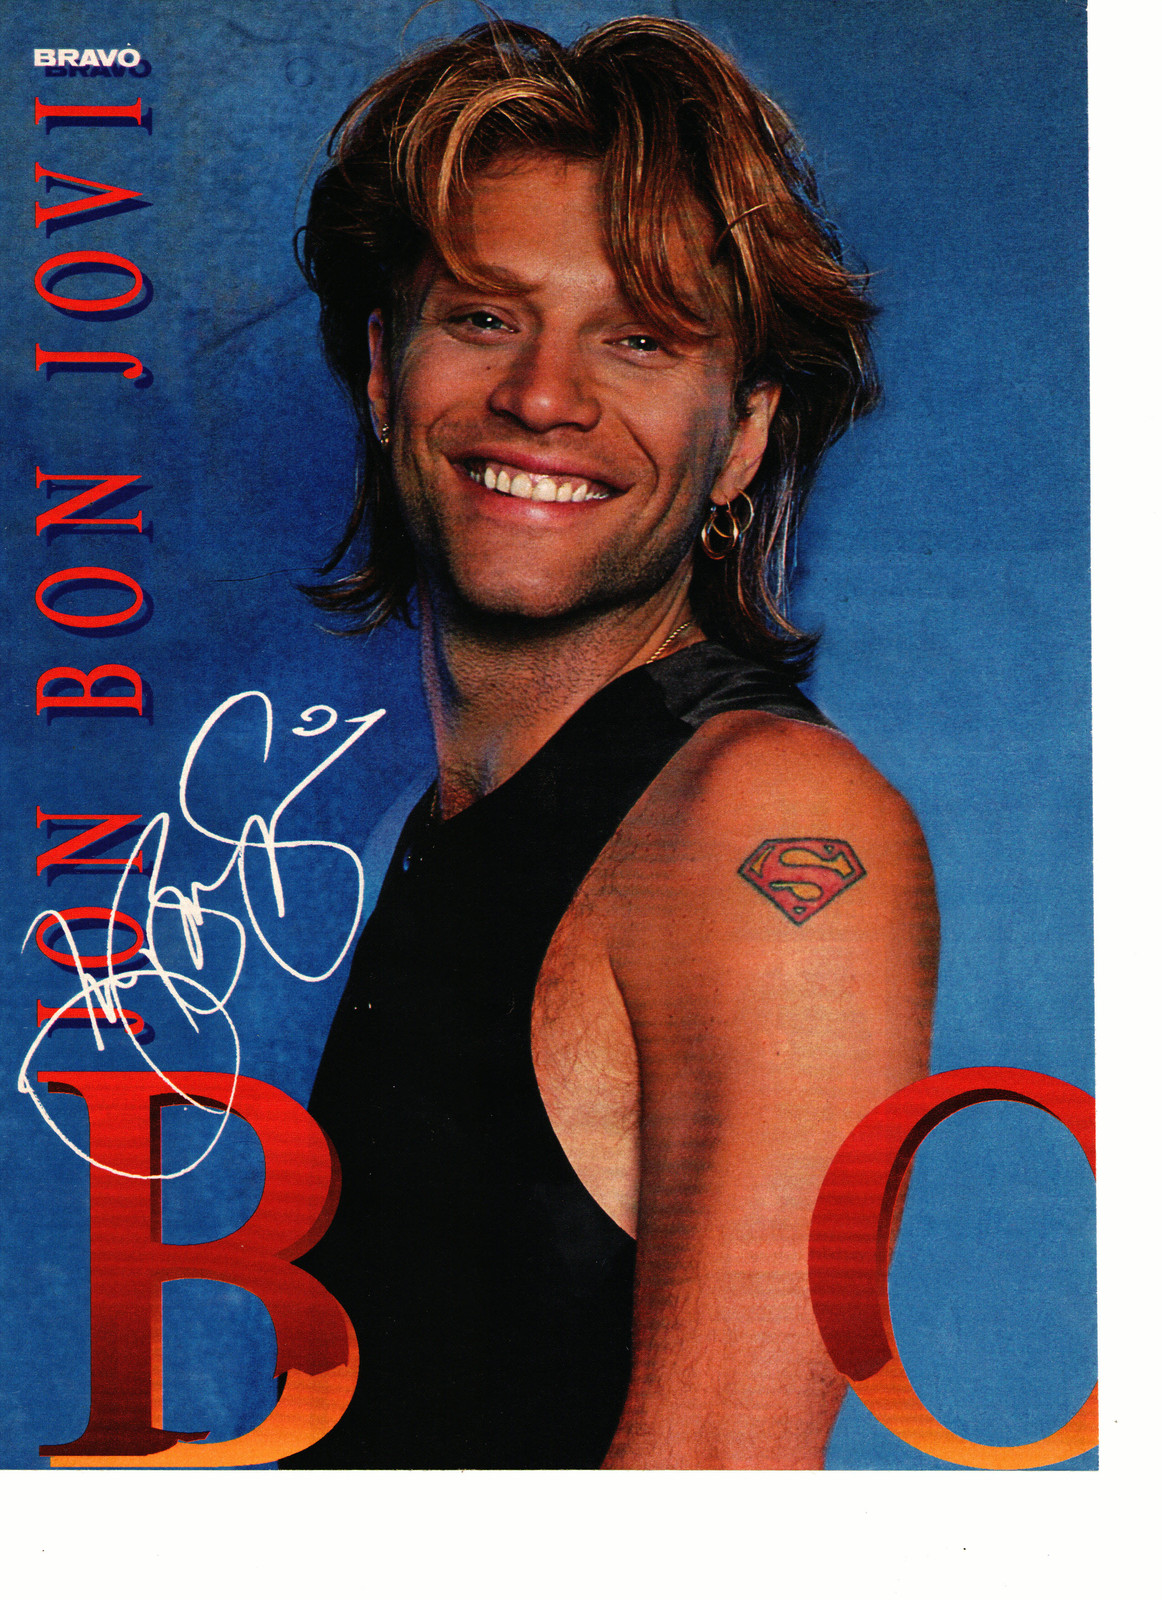 Show full-size image of Jon Bon Jovi teen magazine pinup clipping Bravo sup...